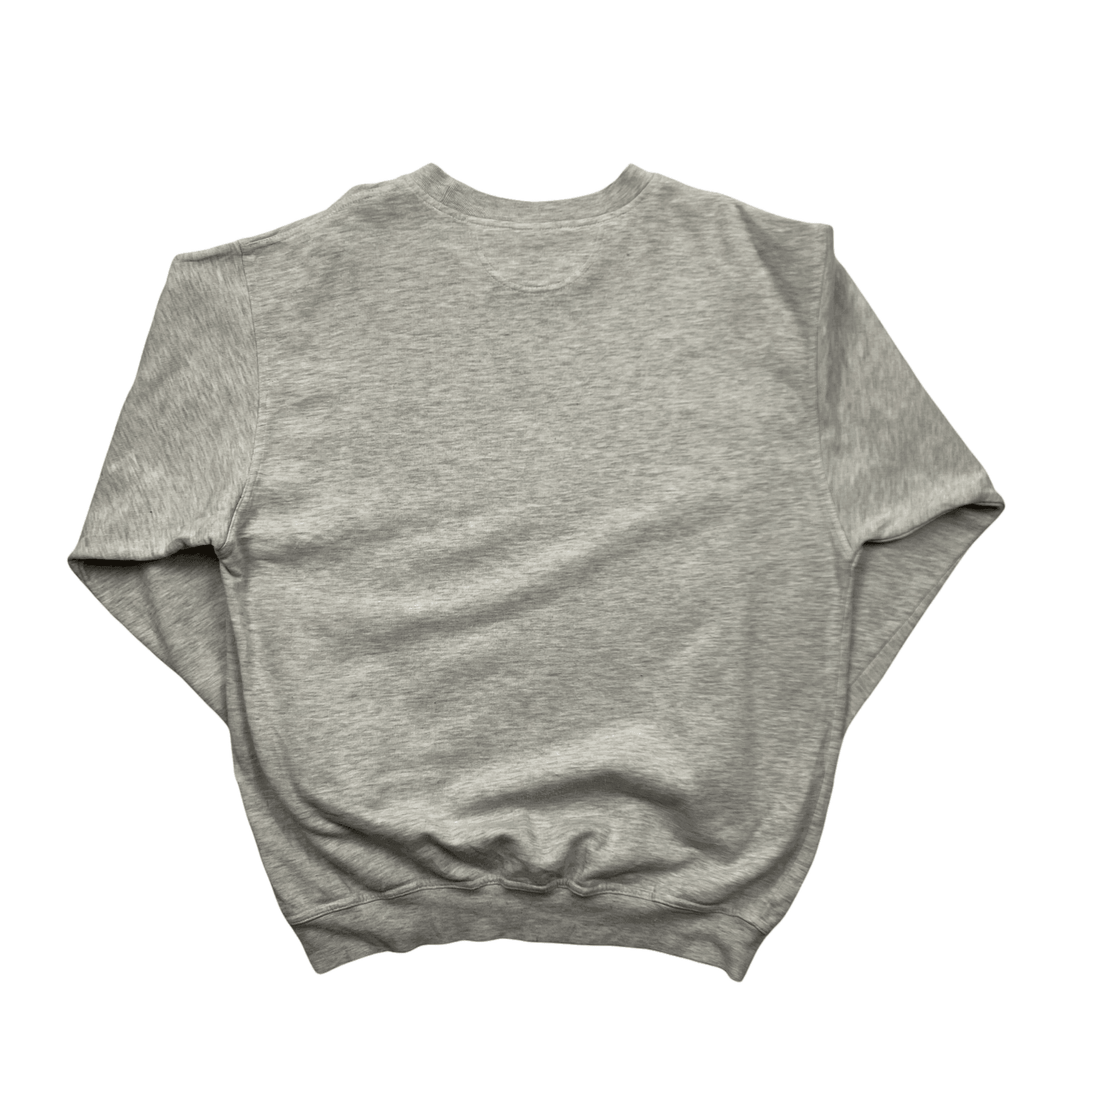 Vintage 90s Grey Adidas Sweatshirt - Medium - The Streetwear Studio